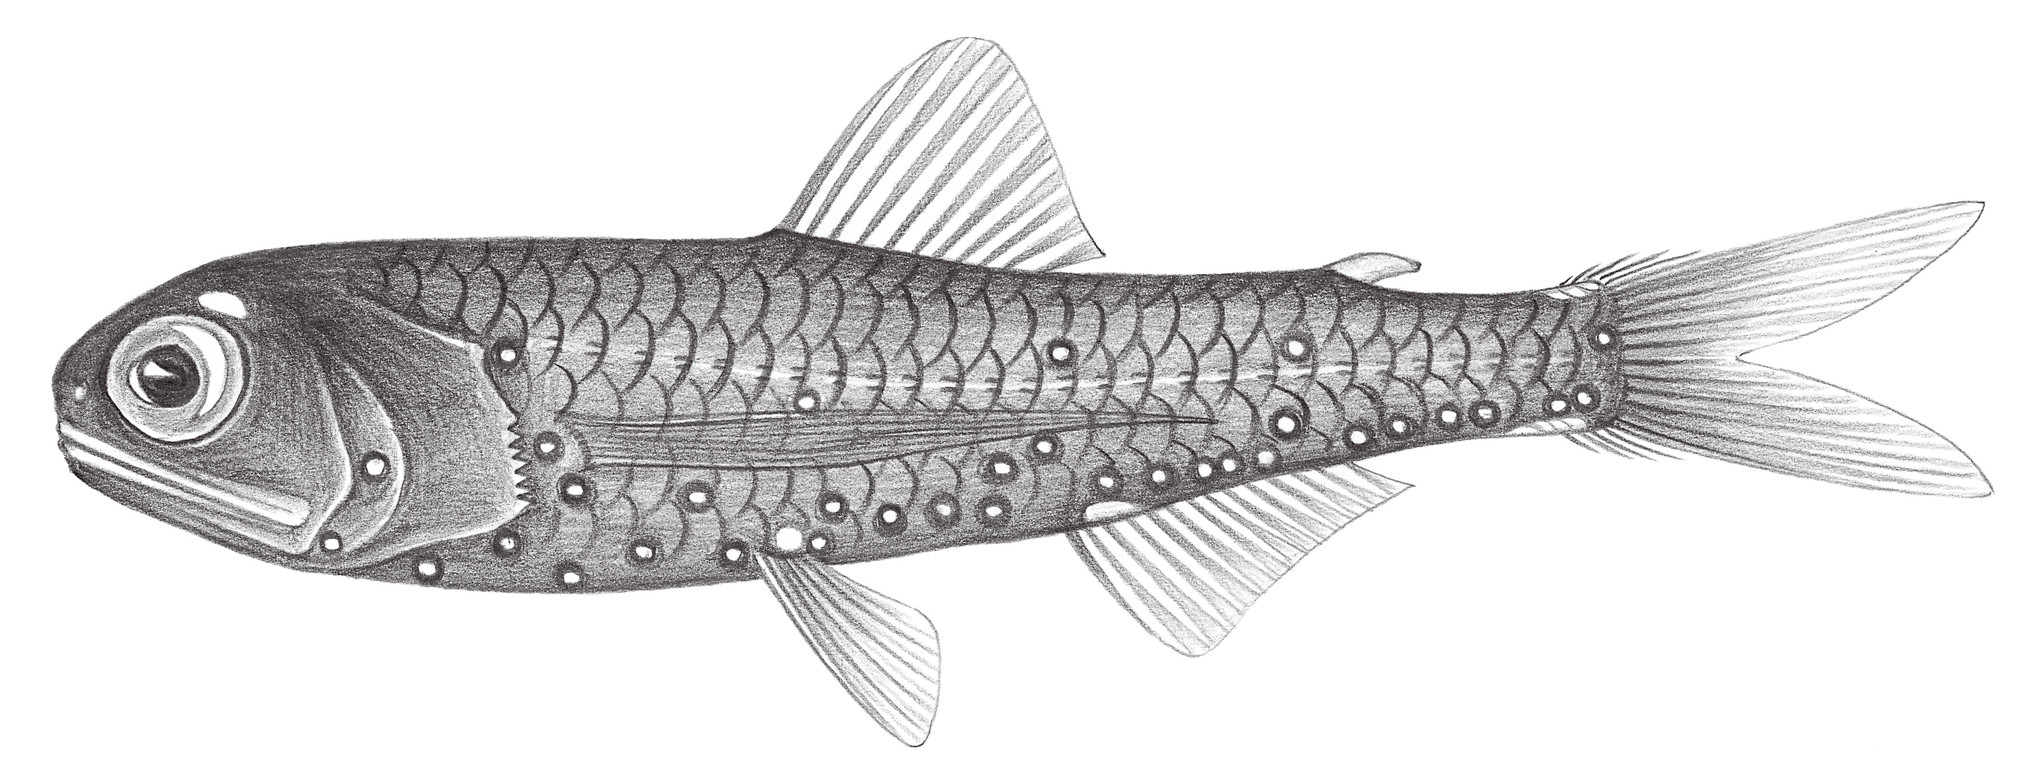 496.	長鰭虹燈魚 Bolinichthys longicipes (Brauer, 1906)